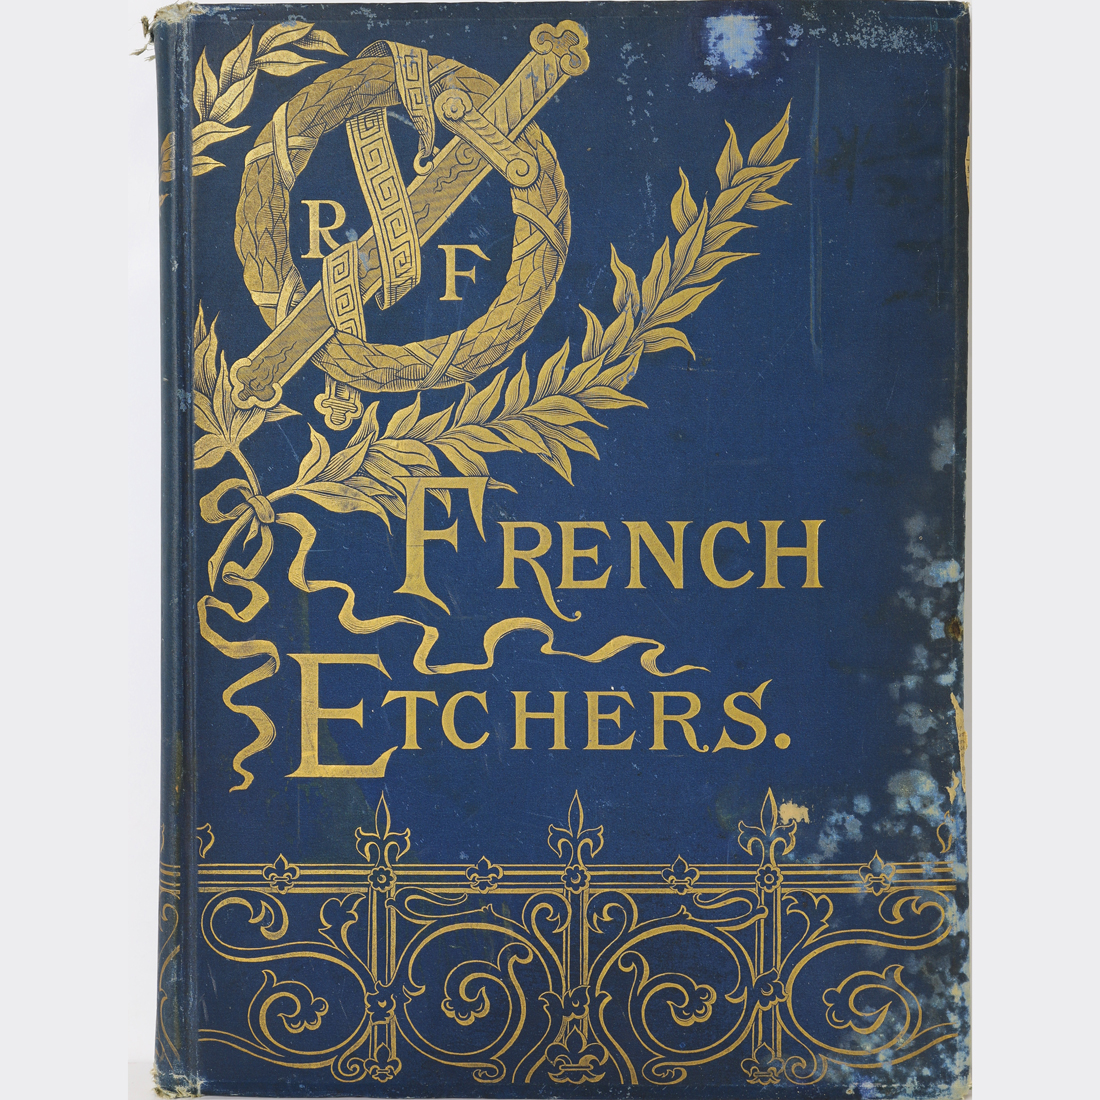 BOOK, ROGER RIORDAN, "FRENCH ETCHERS"